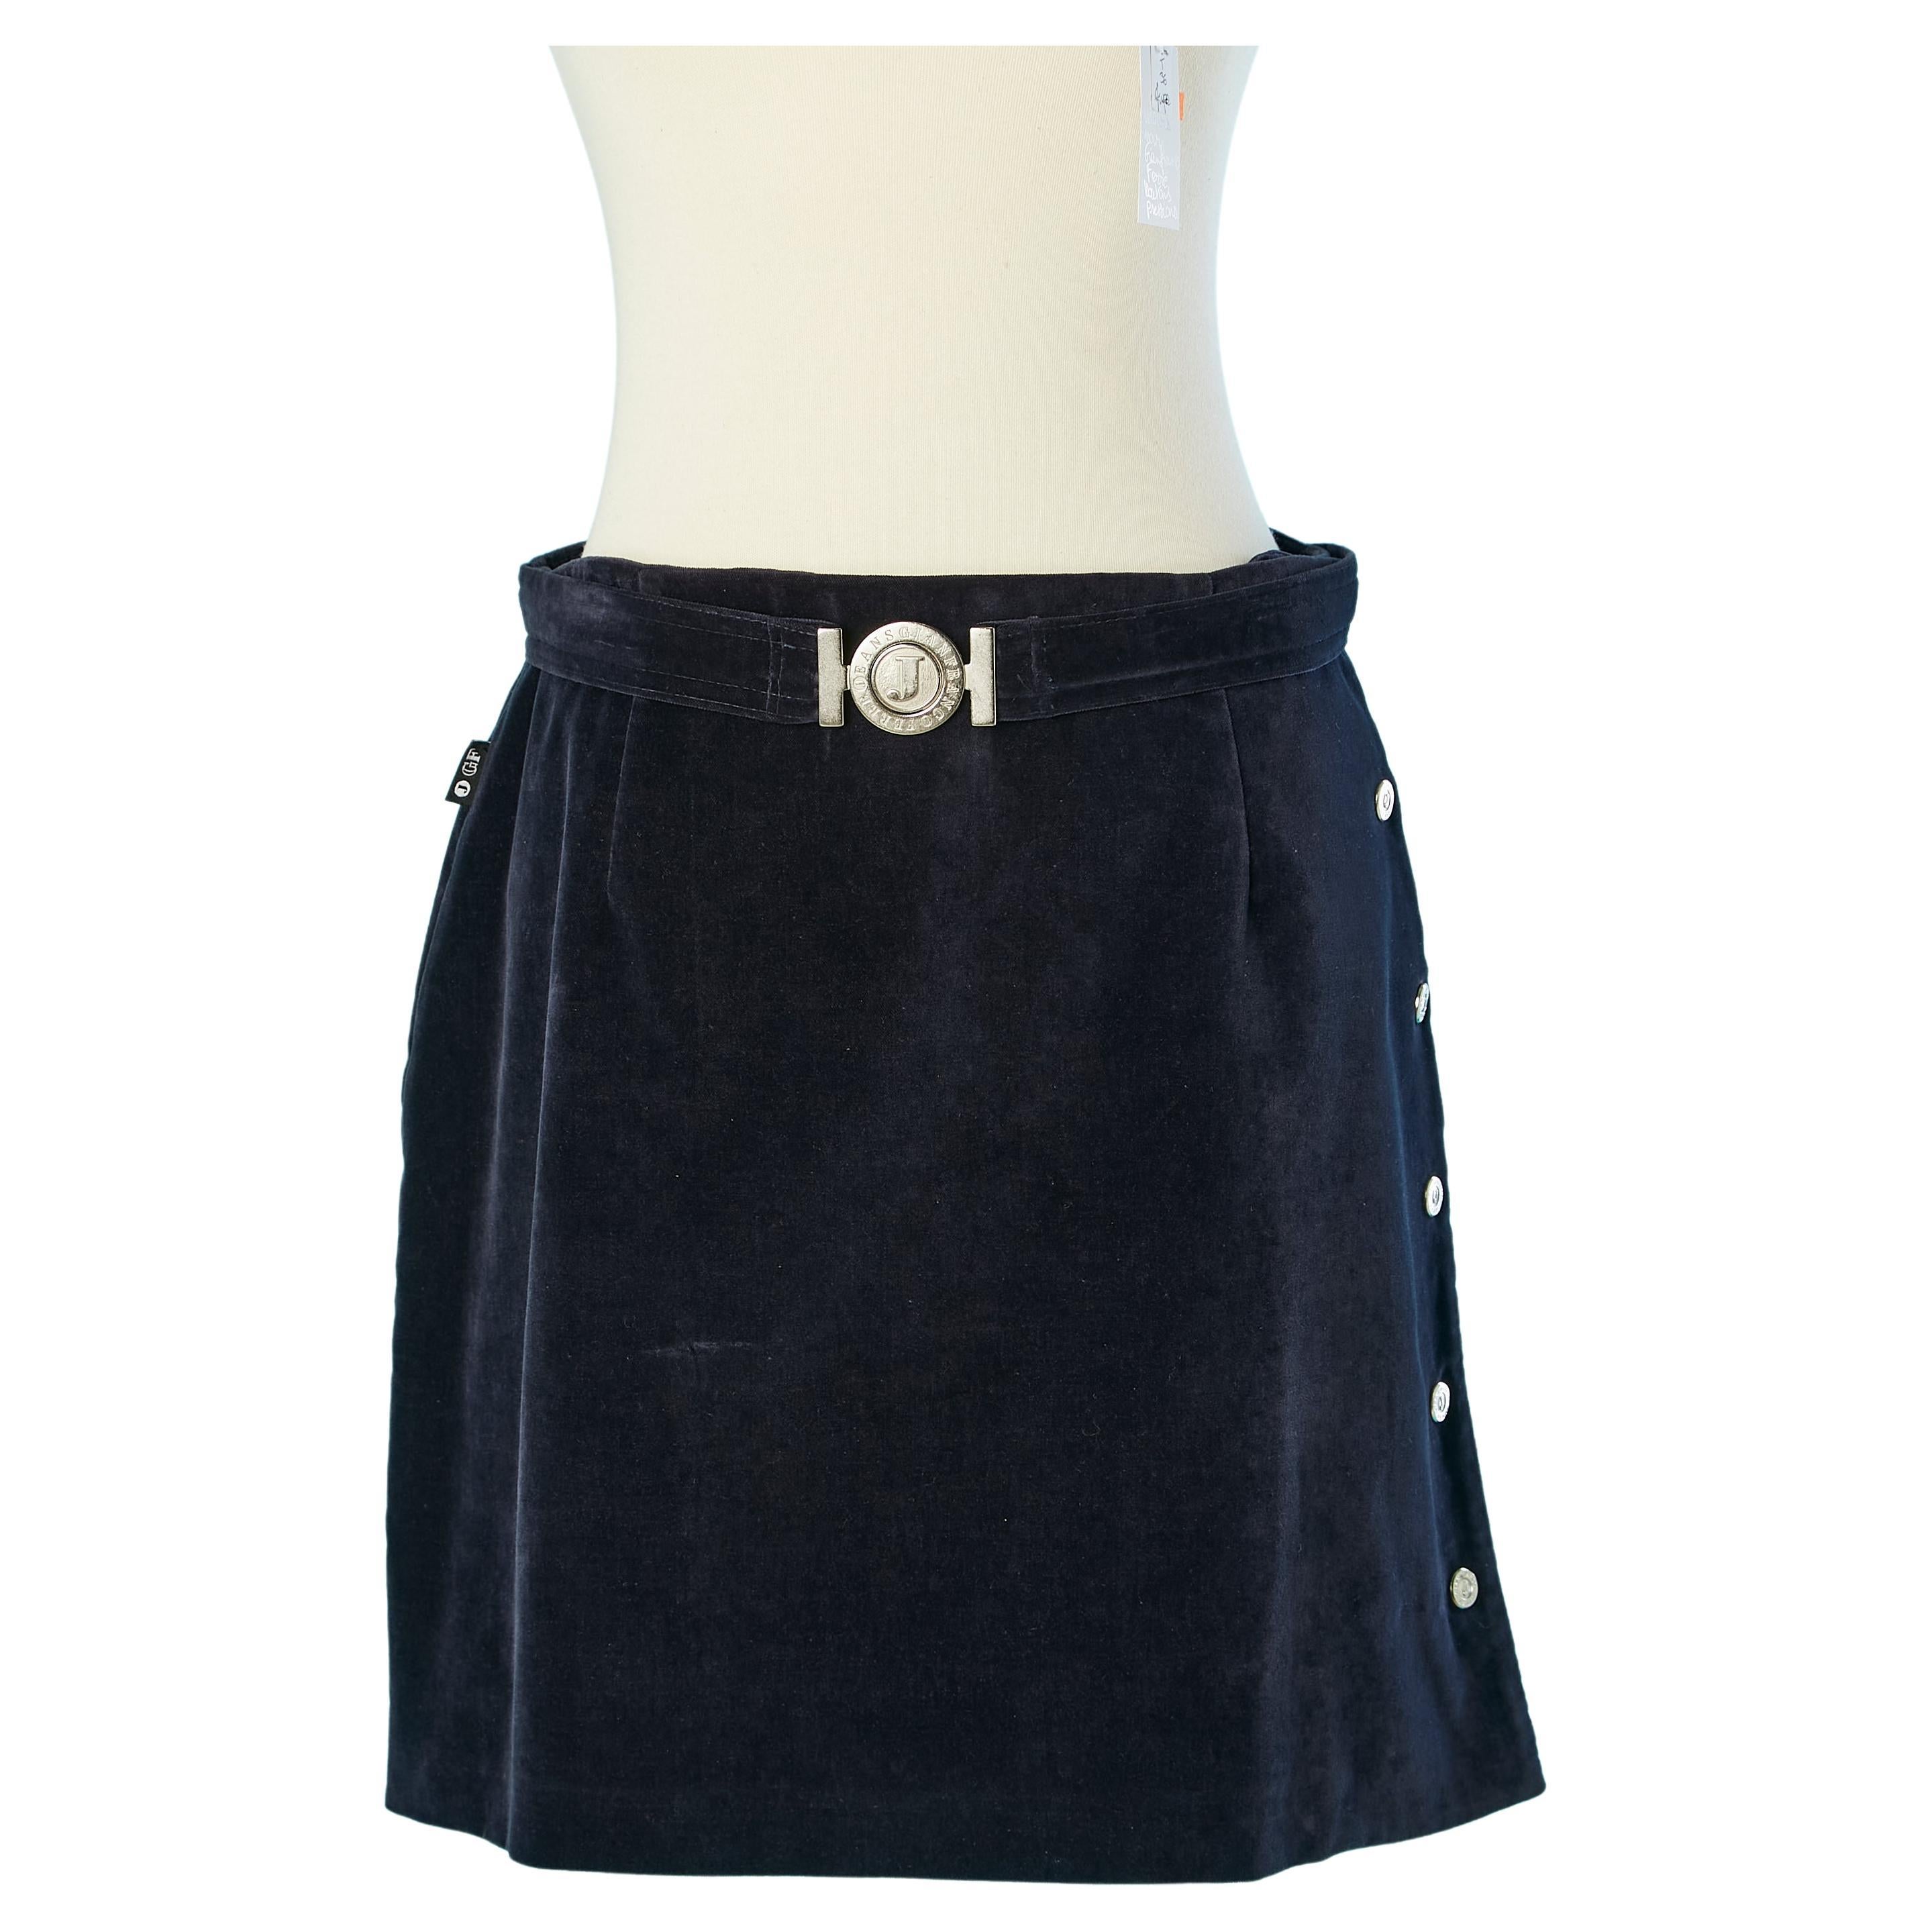 Velvet skirt with branded snap and branded belt buckle Gianfranco Ferré Jeans  For Sale